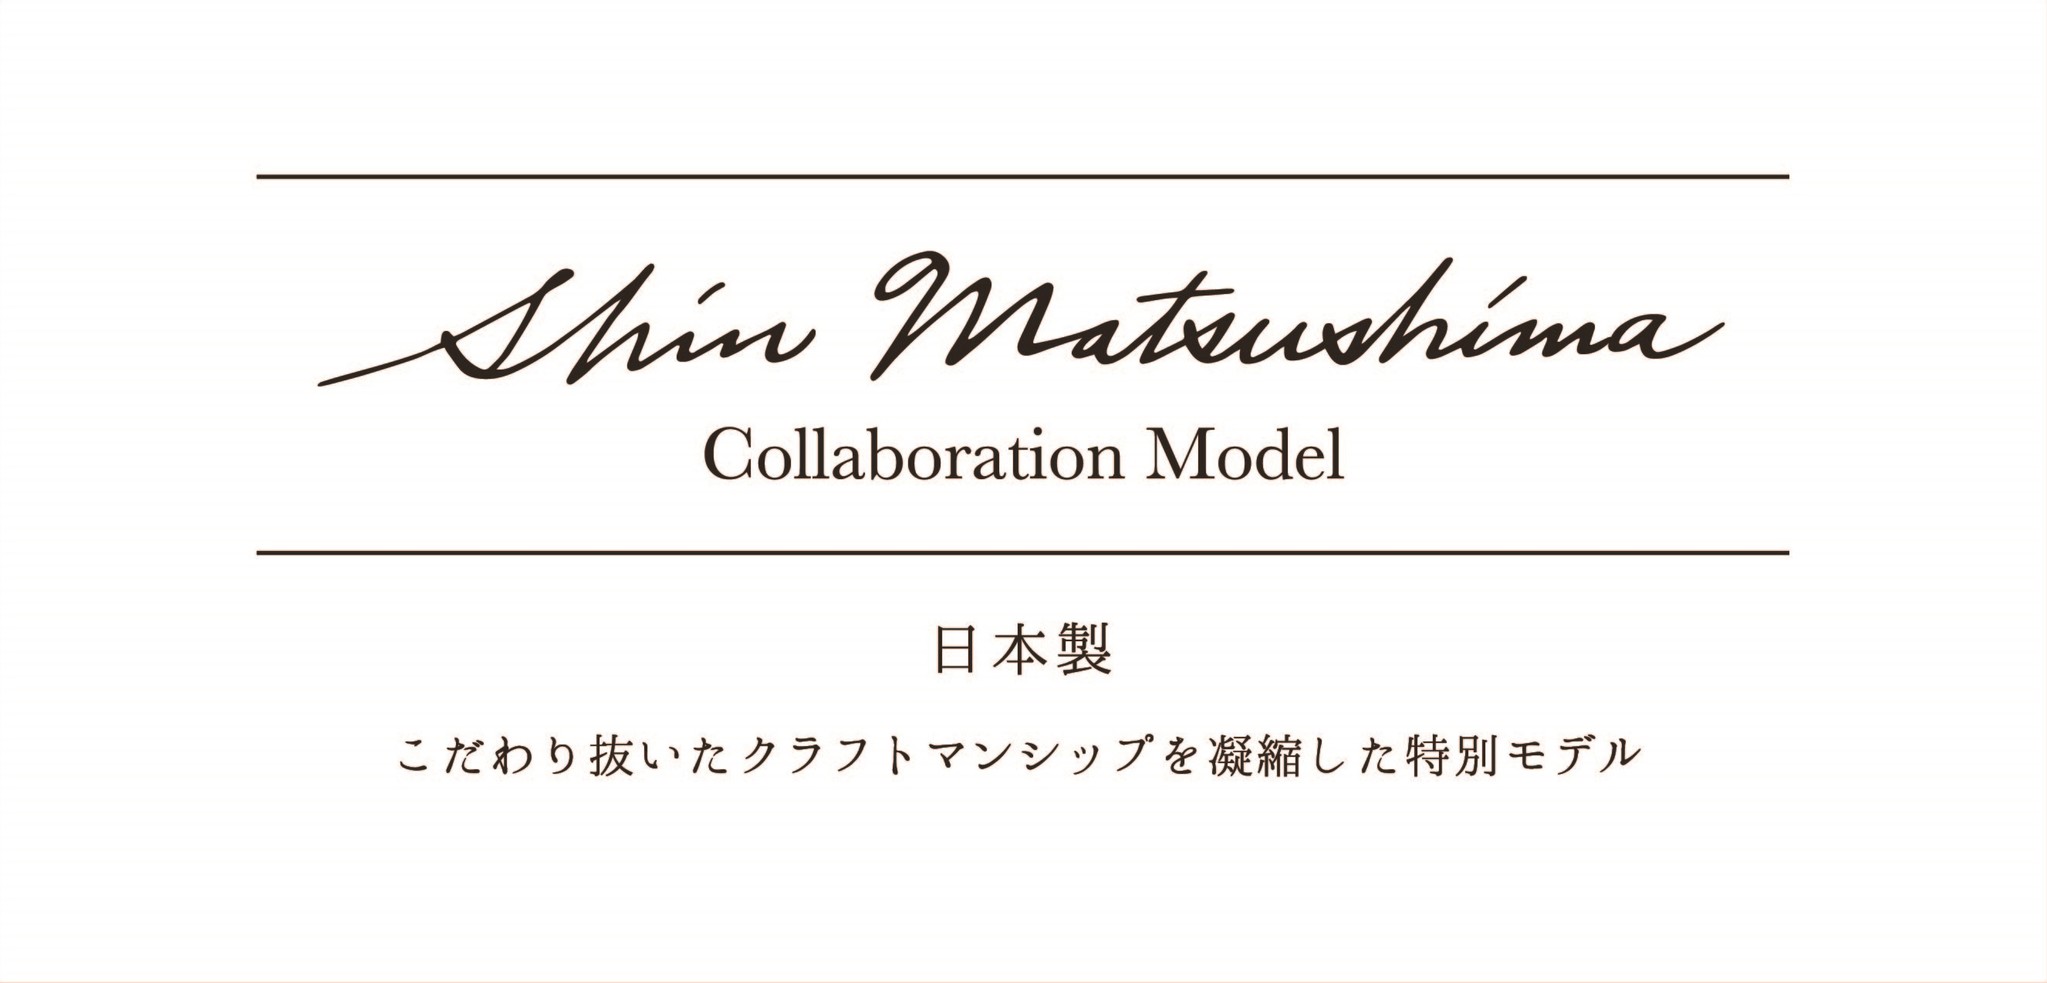 Zoff Matsushima Shin コラボレーションモデル発売 株式会社インターメスティックのプレスリリース